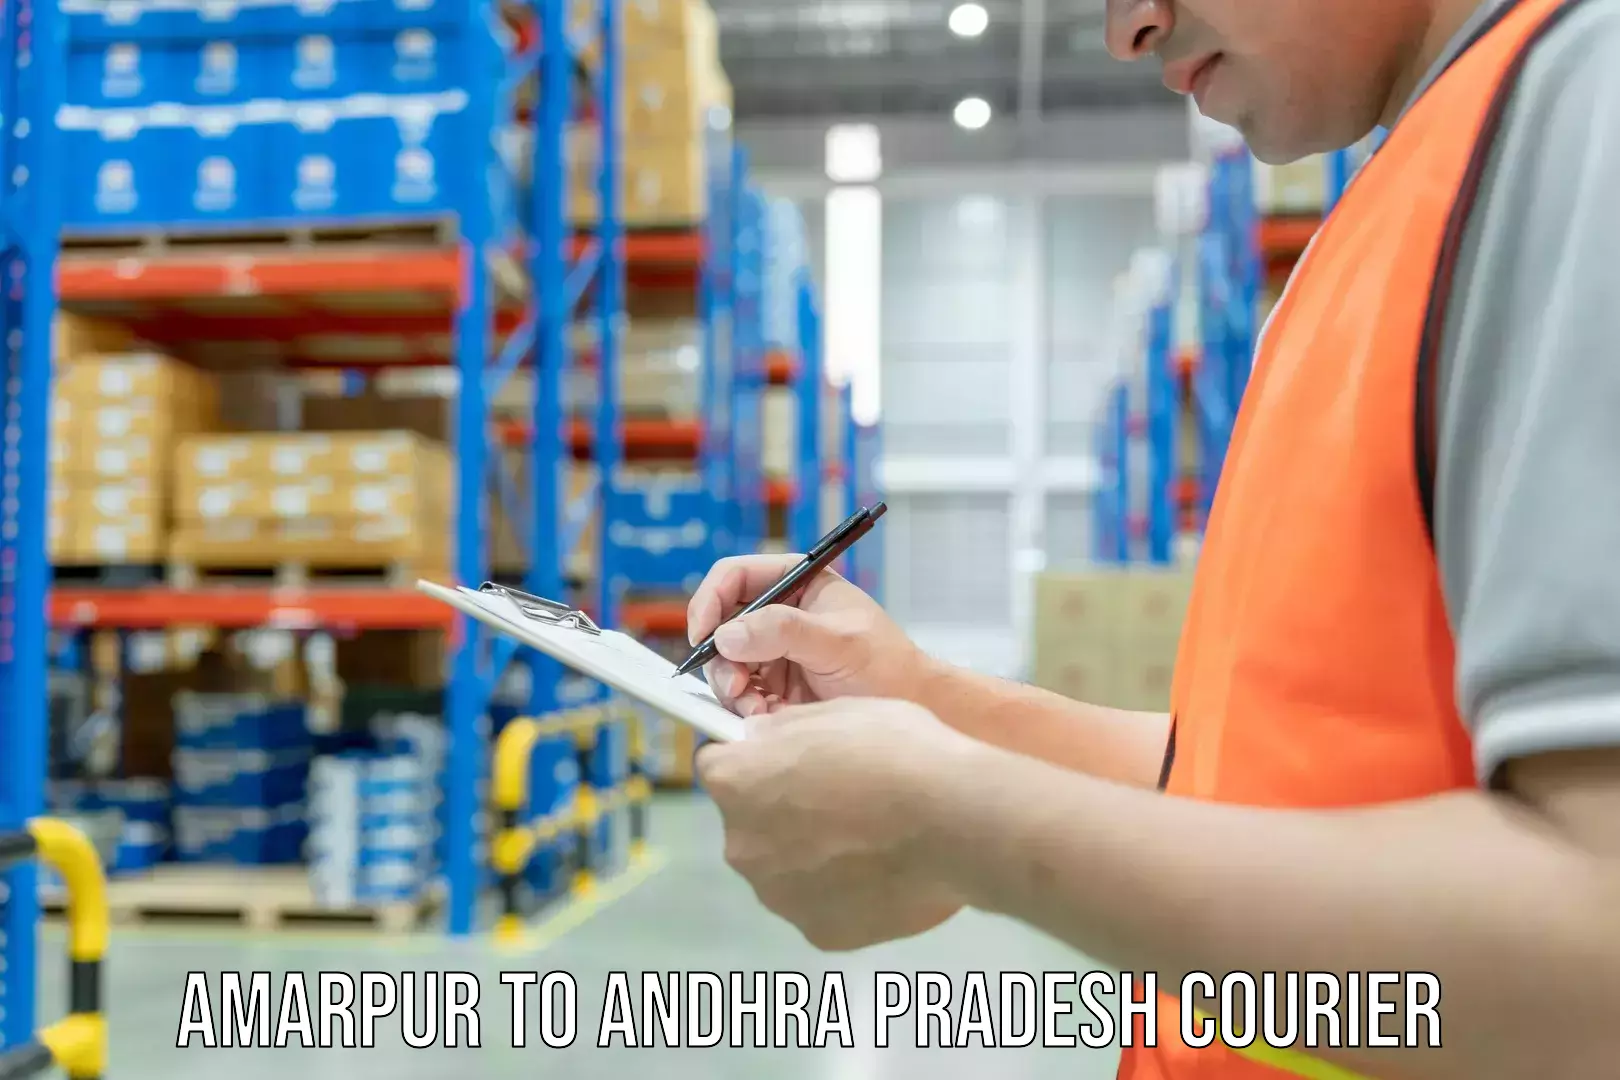 24/7 courier service Amarpur to Andhra Pradesh